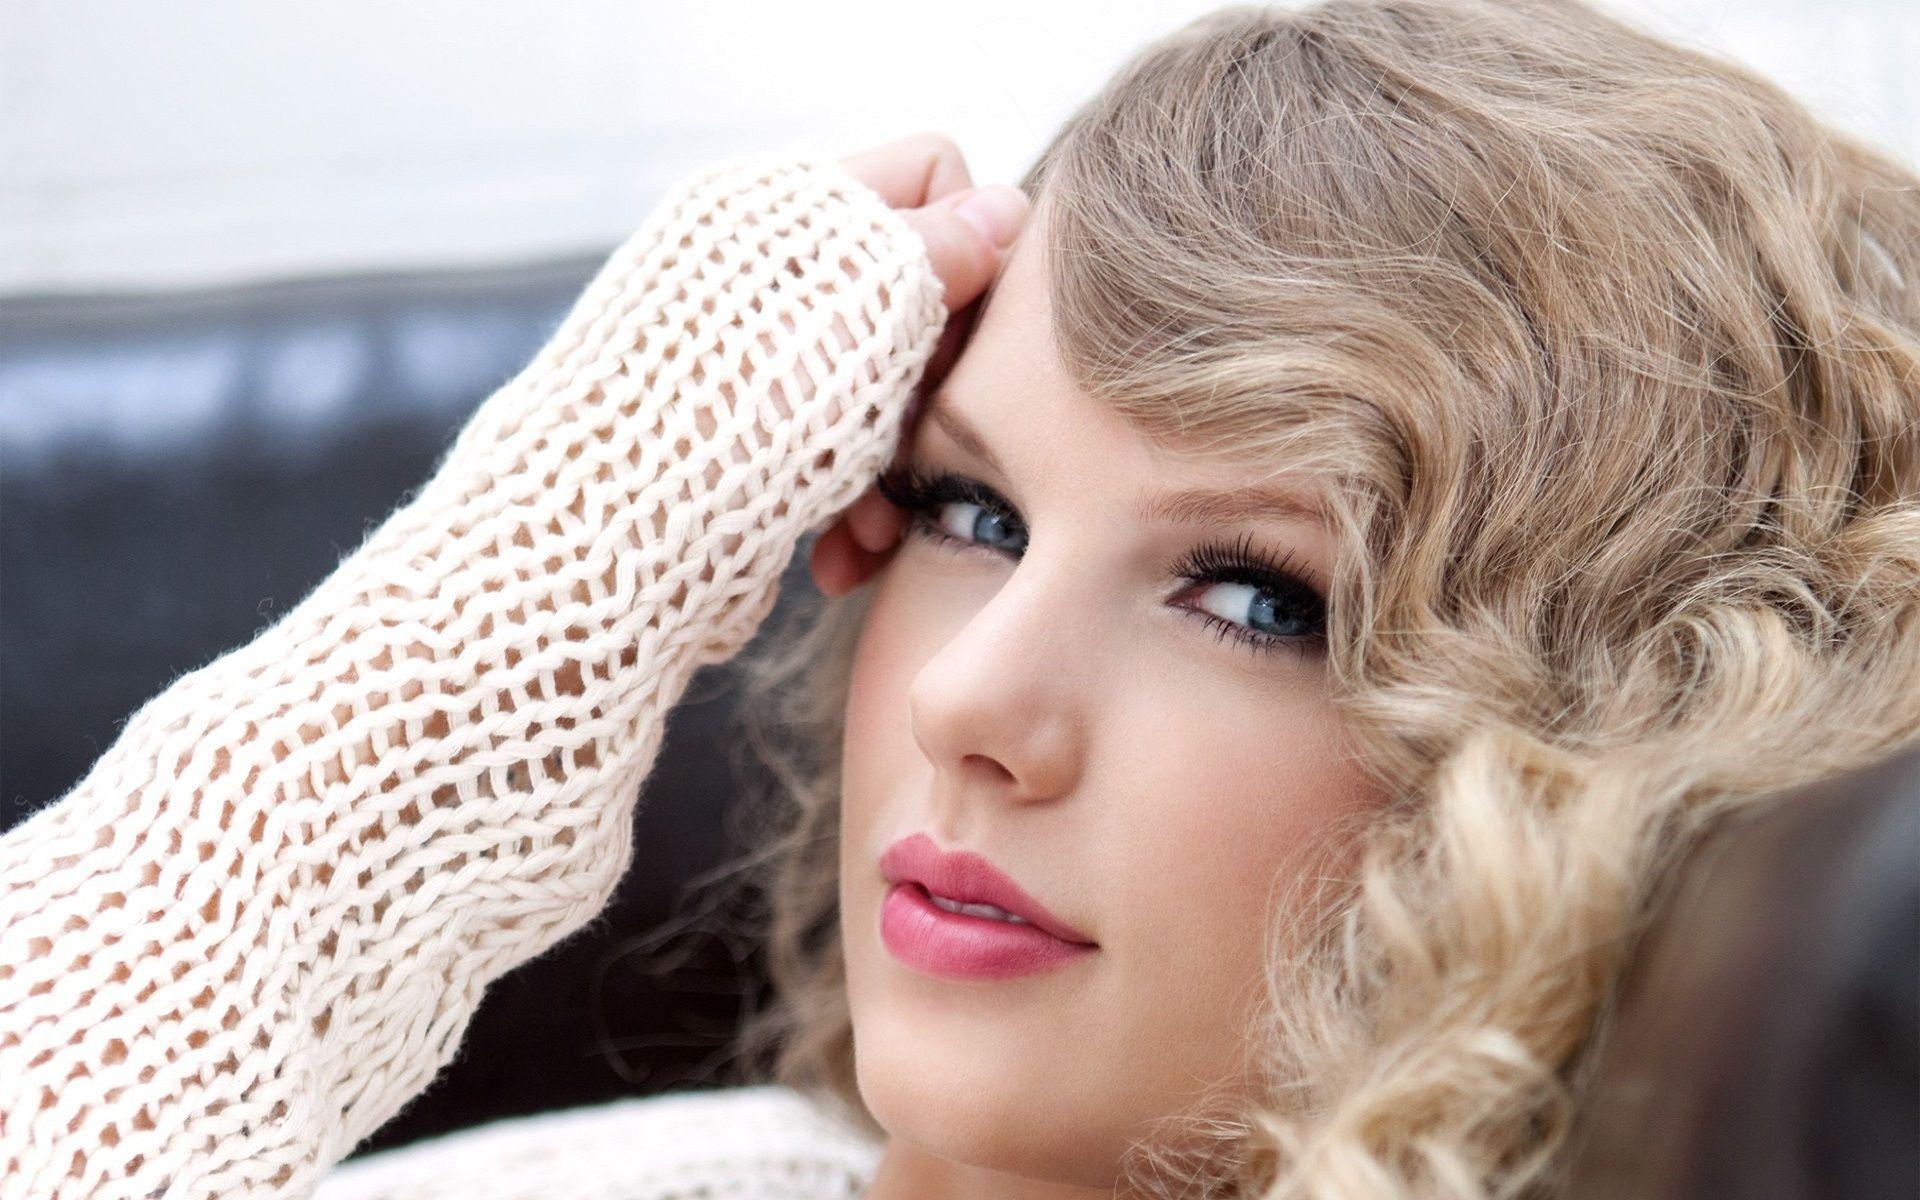 Taylor Swift Wallpaper, Taylor Swift Wallpaper Free Download